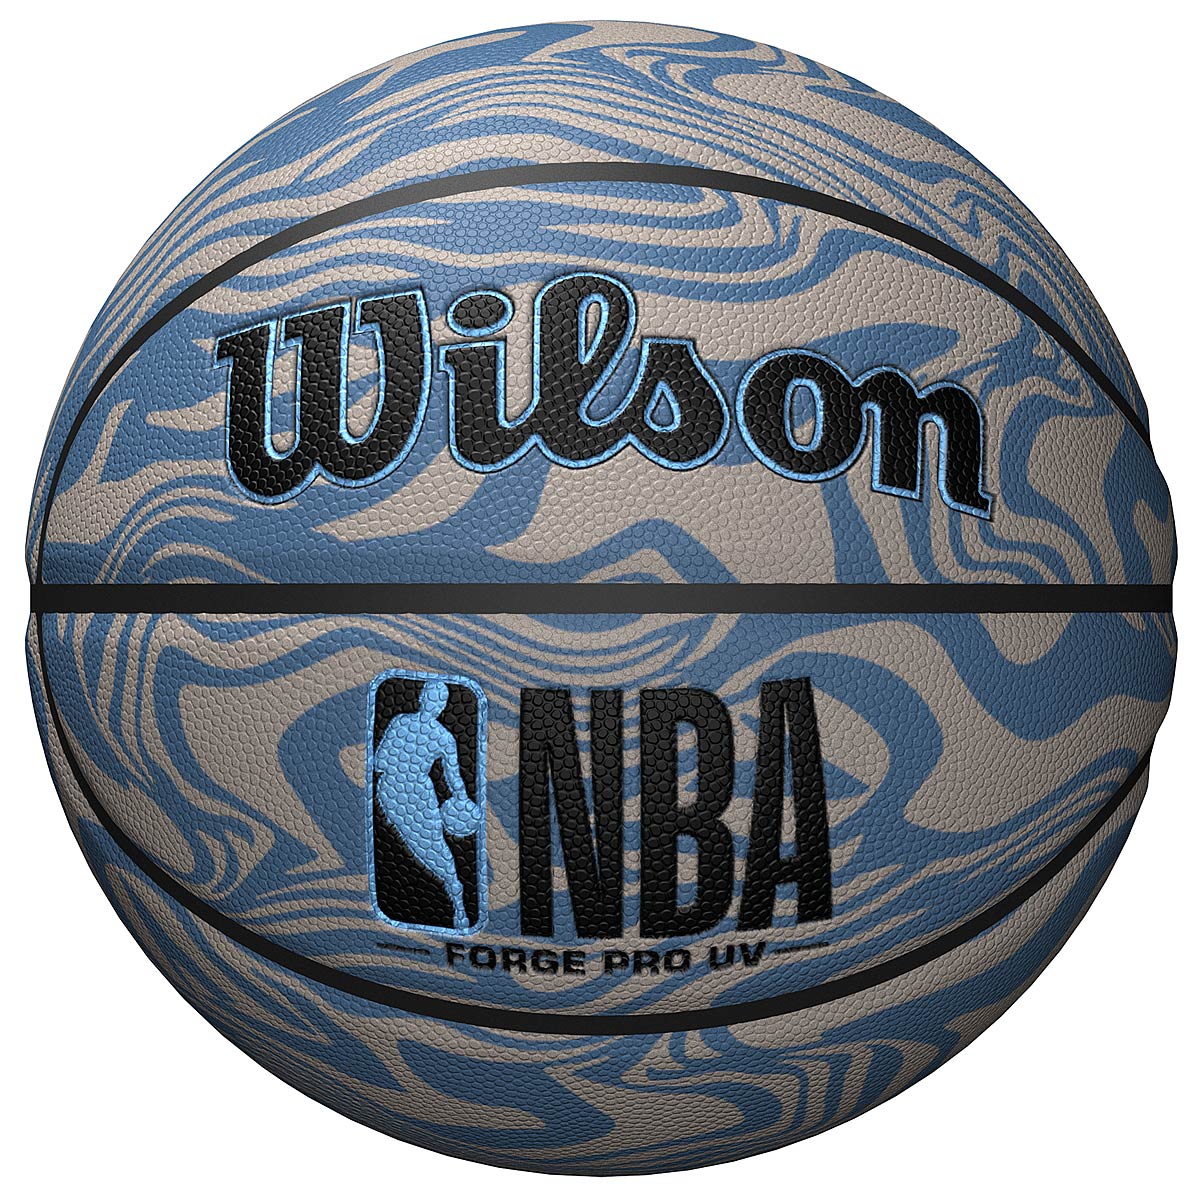 Wilson NBA Forge Pro Uv Basketball, Lifestyle 7